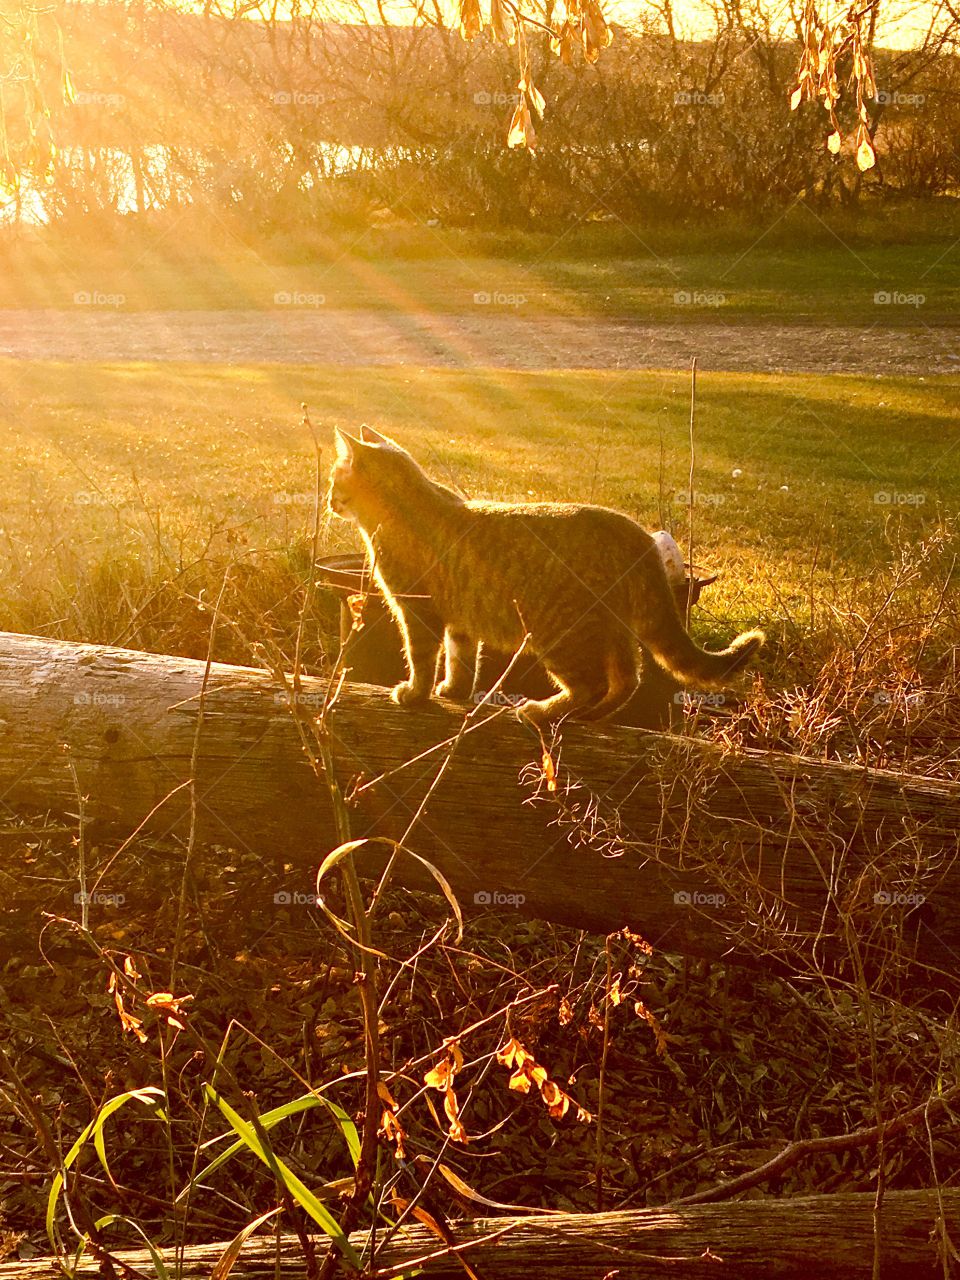 Cat standing on log